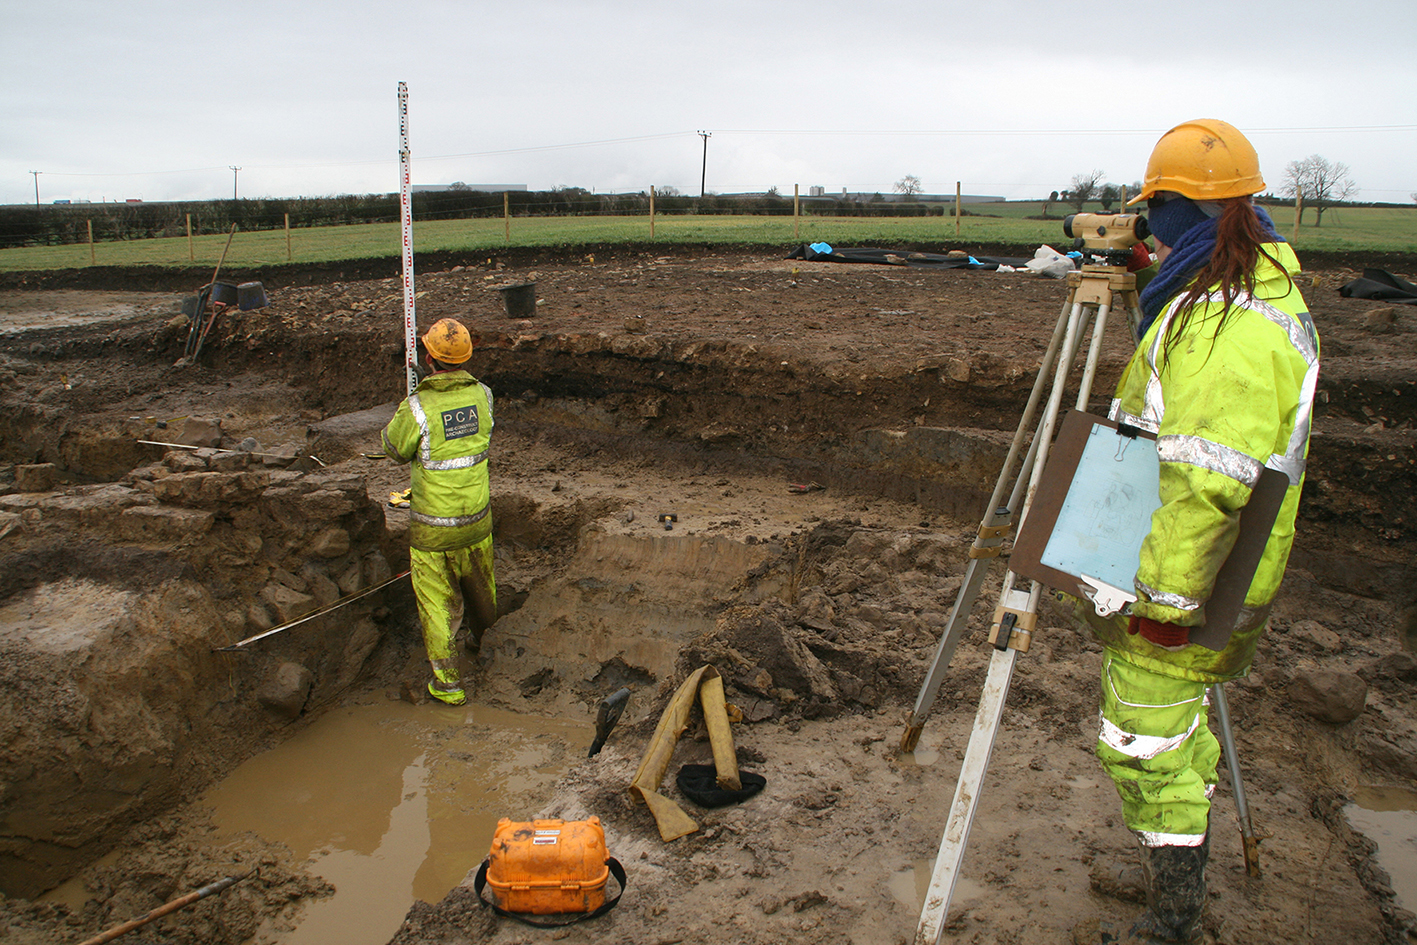 Archaeologists survey the site